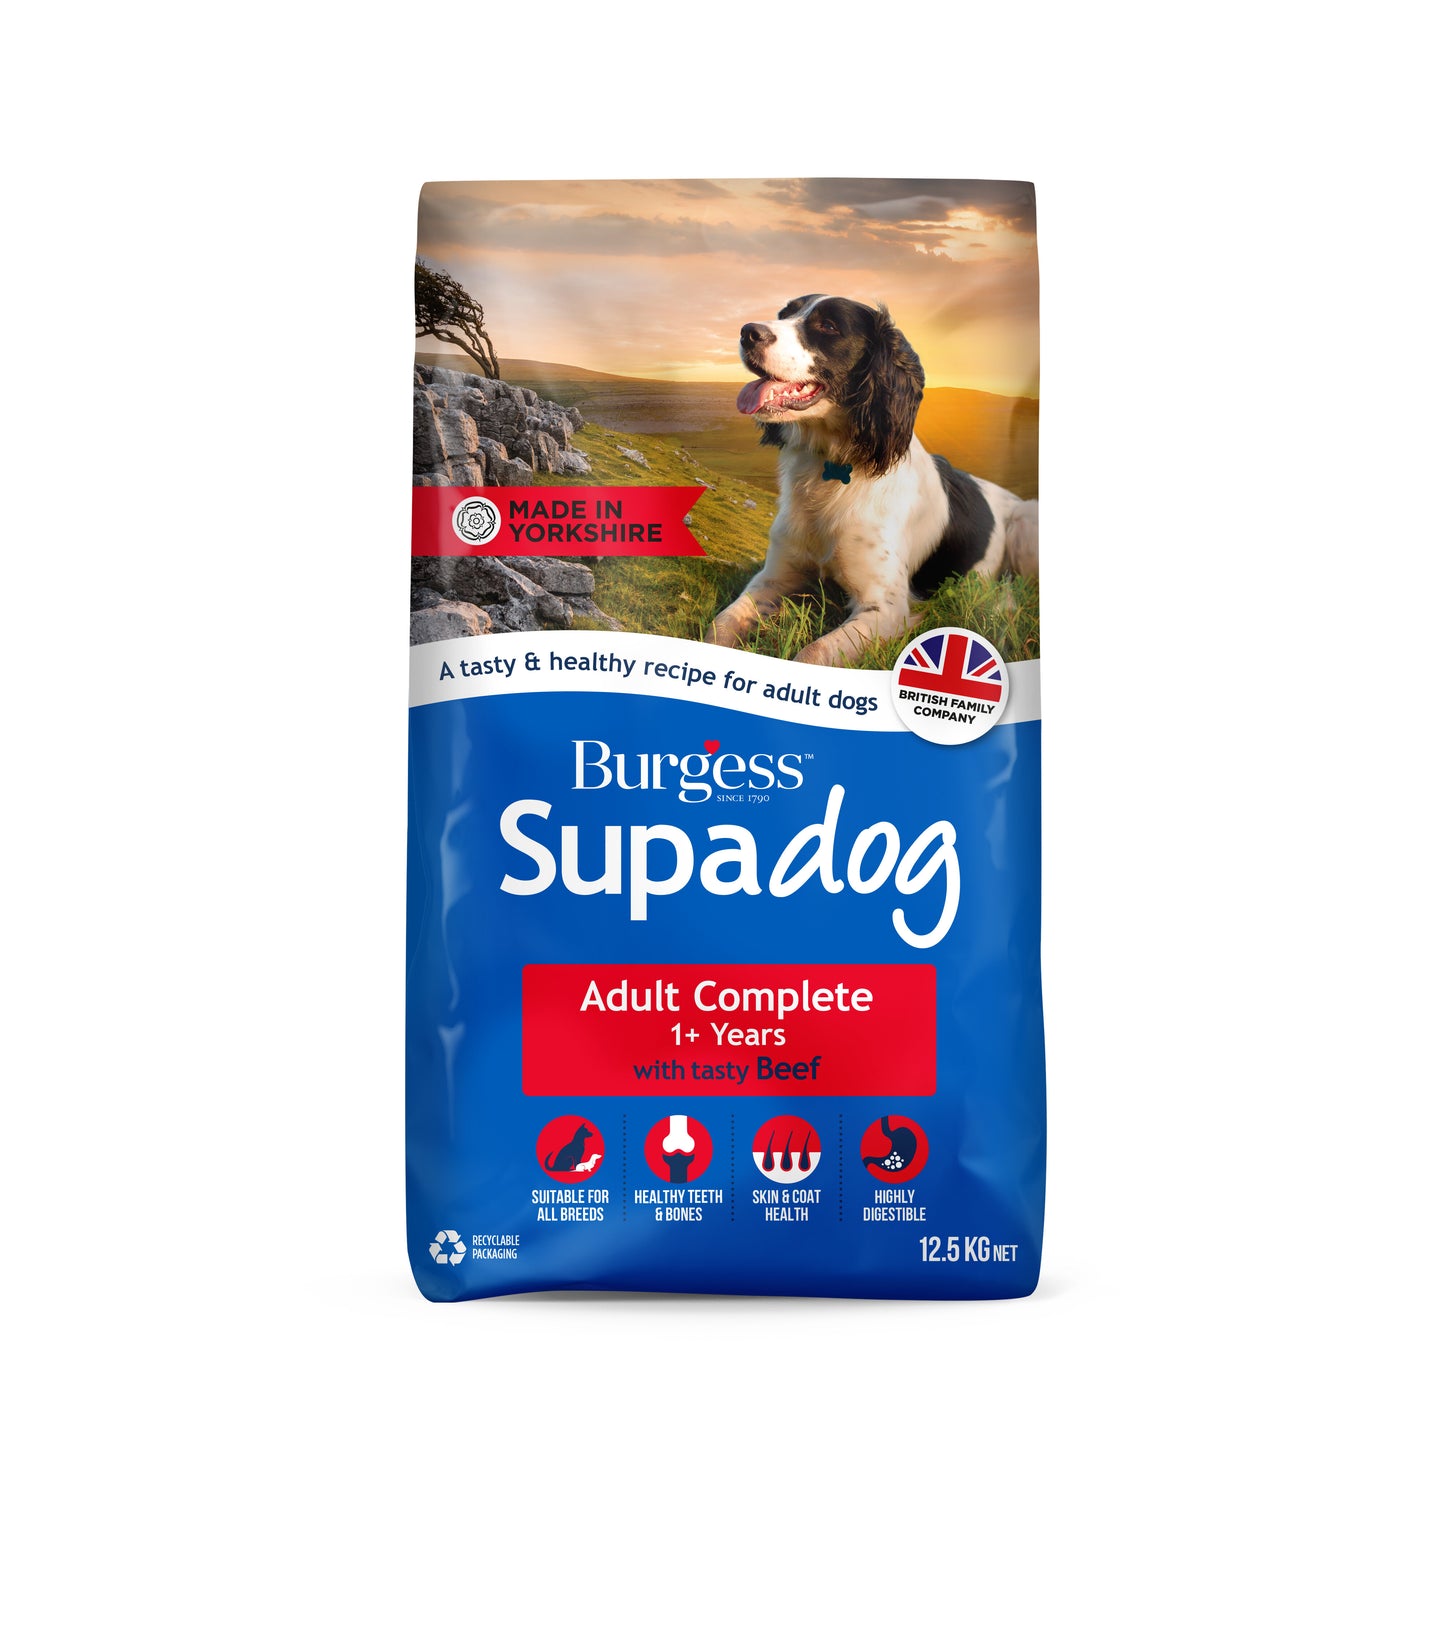 Burgess Supadog Complete Beef 12.5 kg - Adult Dry Dog Food